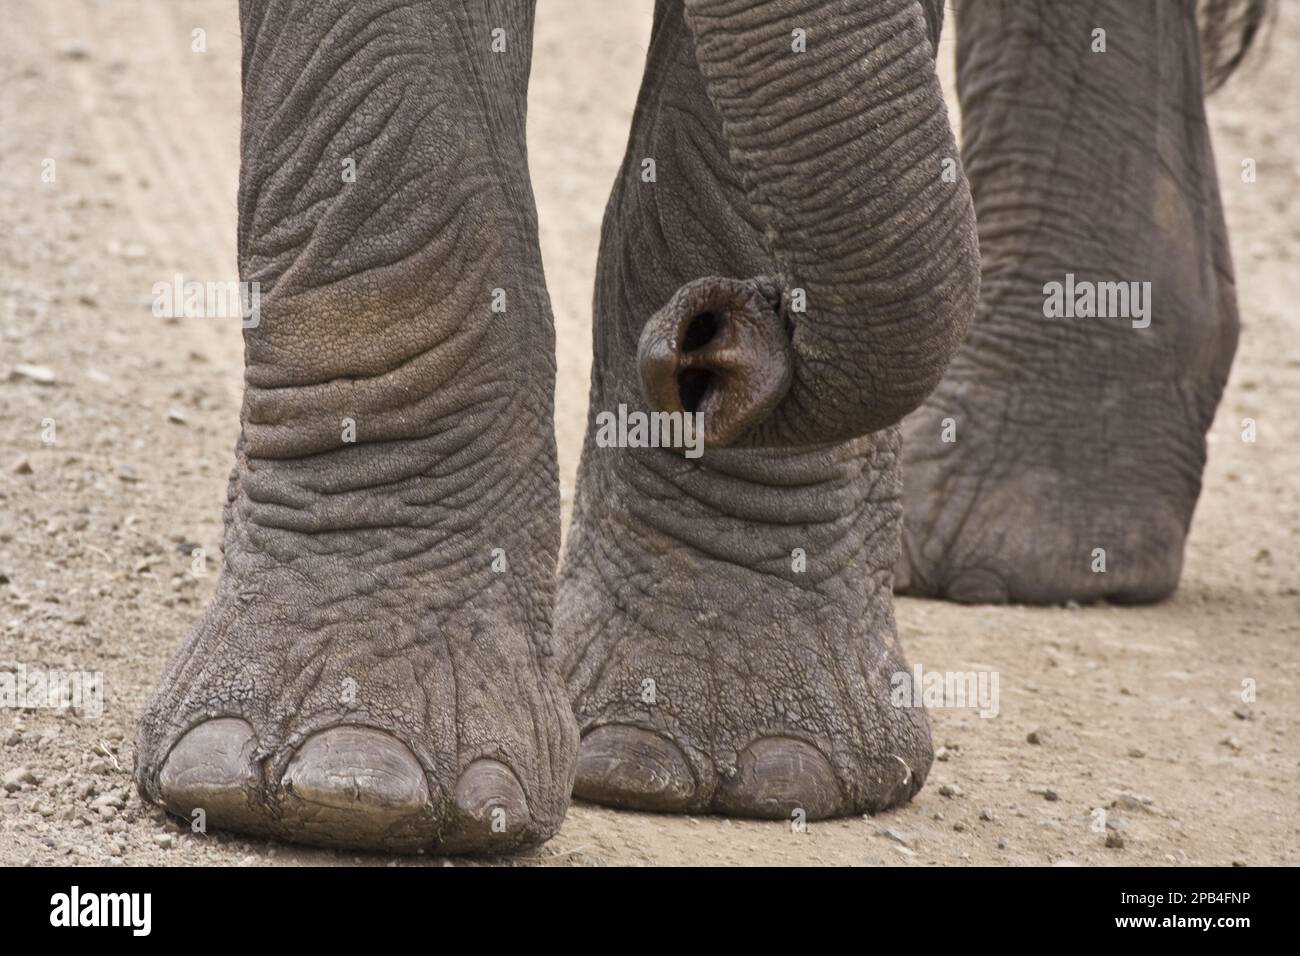 Afrikanischer Elefant, Elefanten, Säugetiere, Tiere Elefantenstamm und Zehen Stockfoto